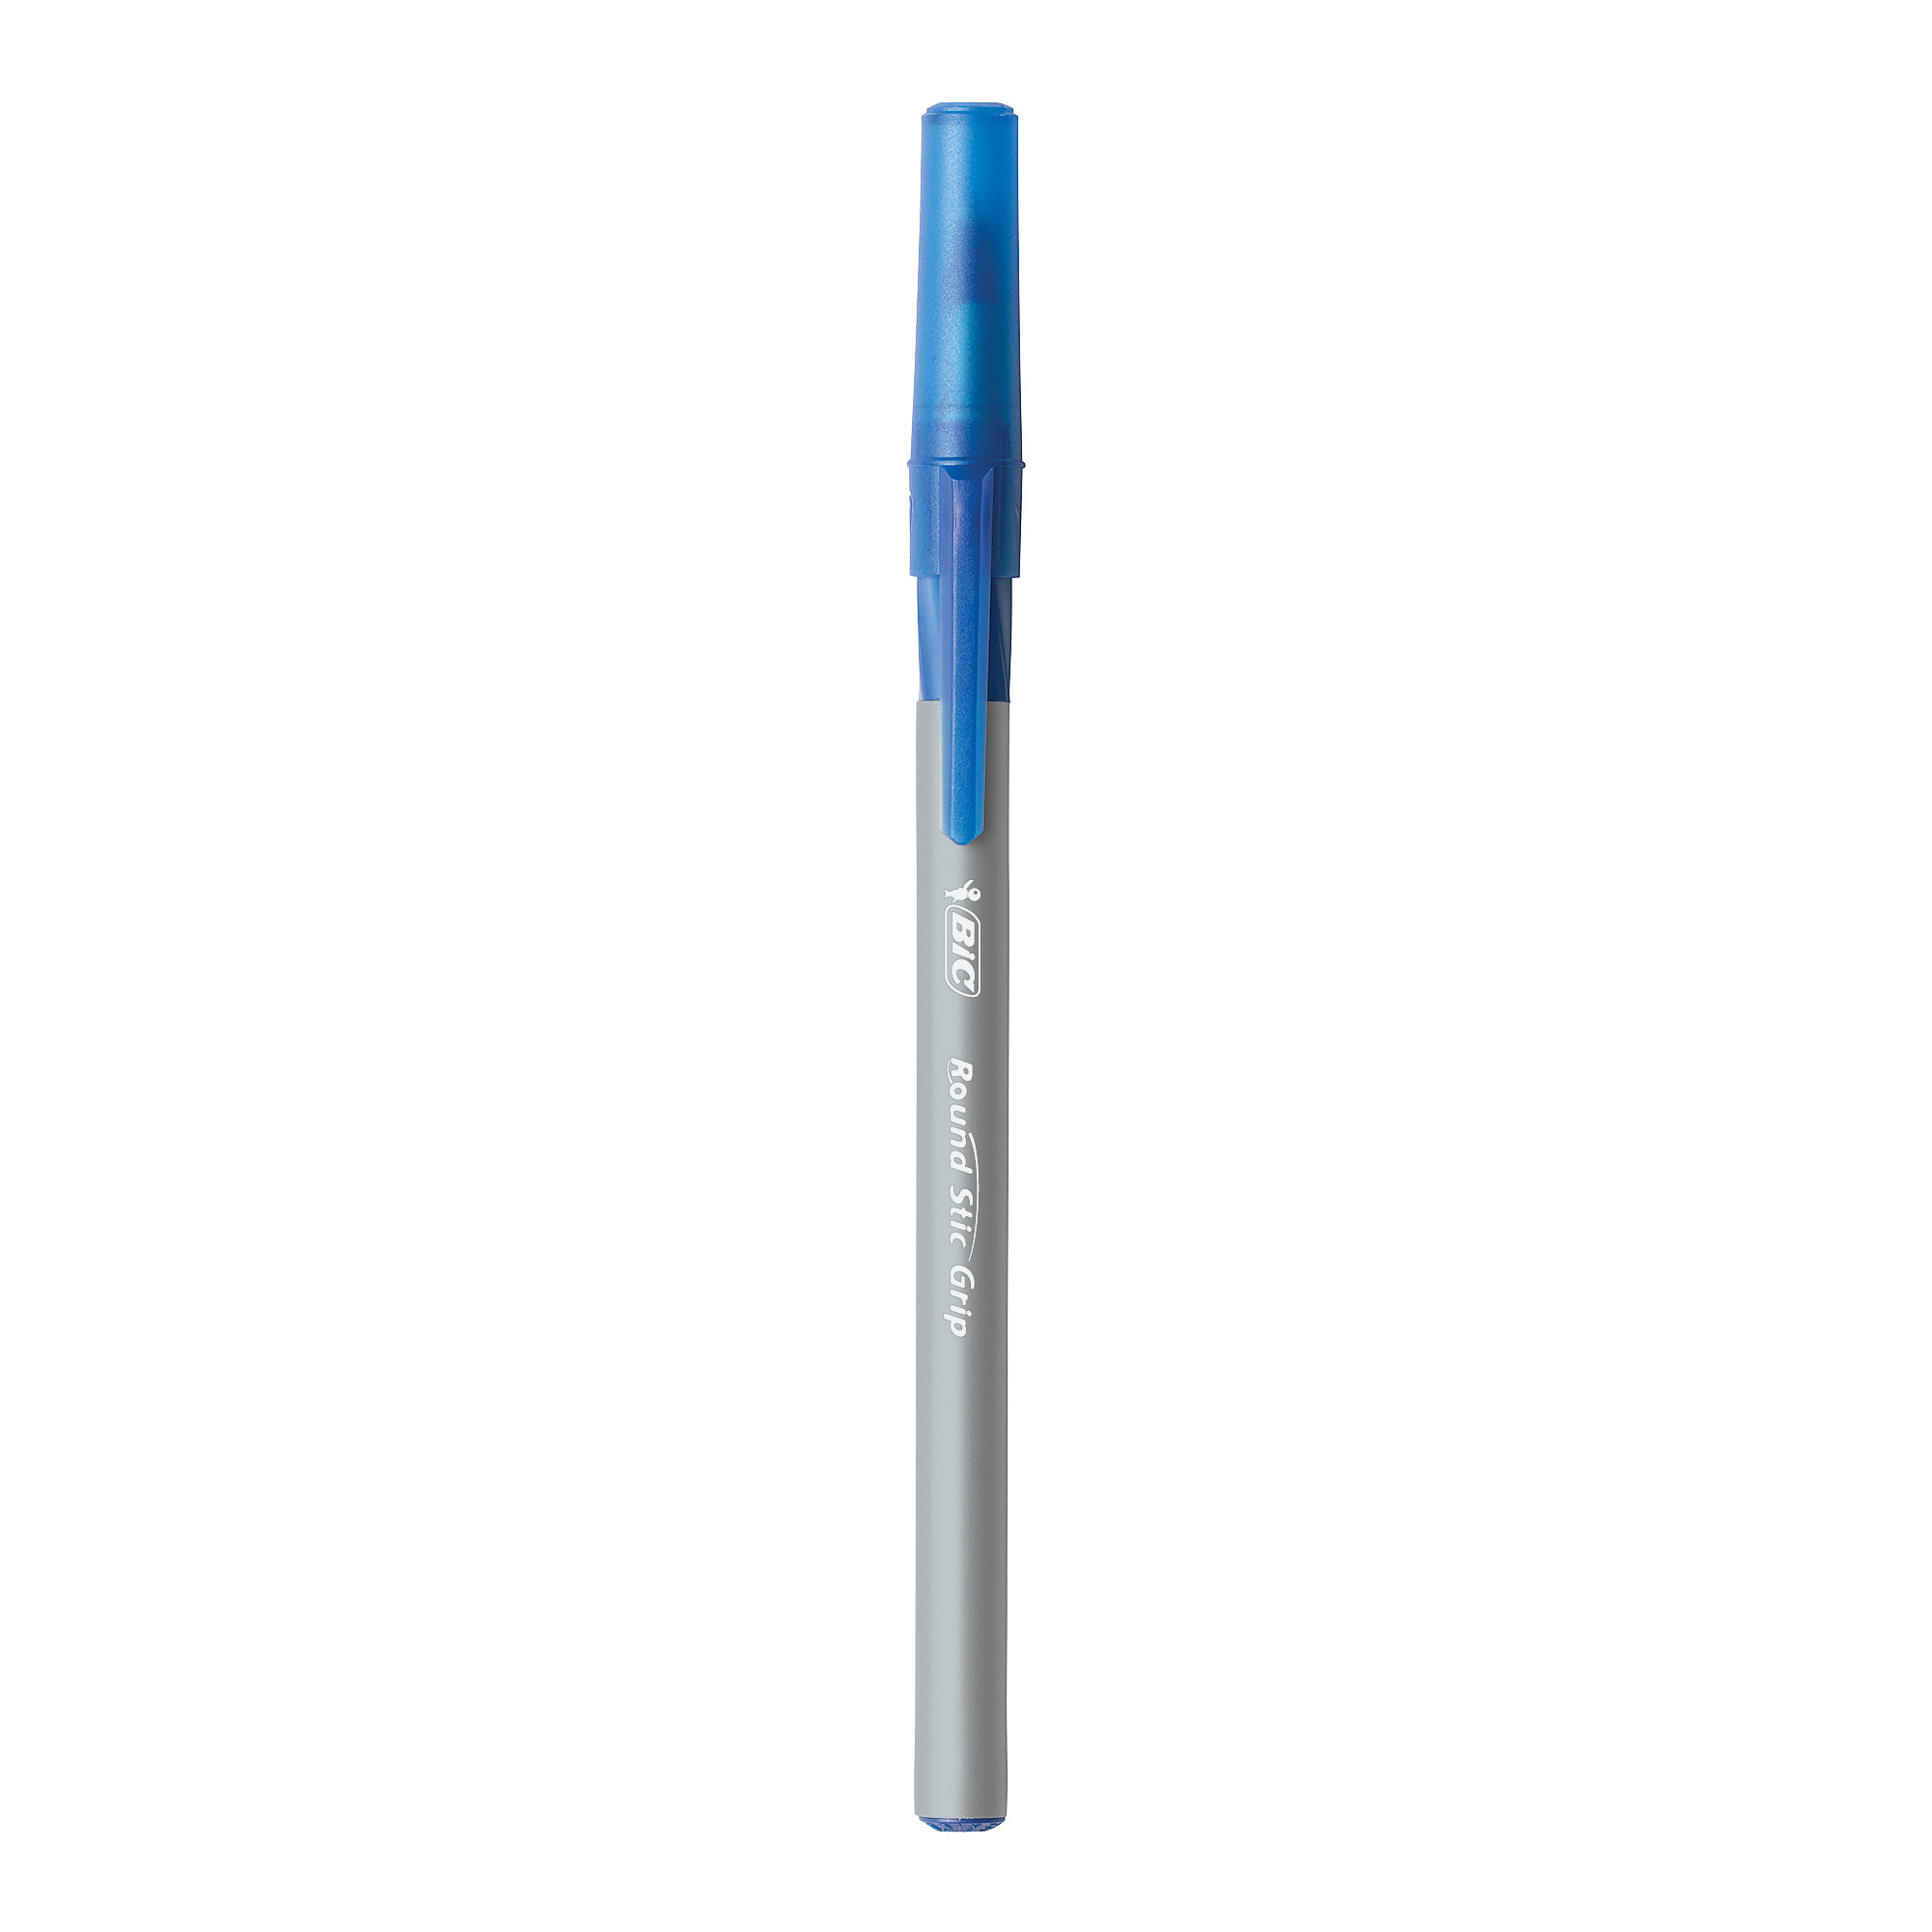 BIC Round Stic Grip Xtra Comfort Ballpoint Pen, Classic Medium Point (1.2 mm), Box of 24 Blue Pens - image 11 of 14